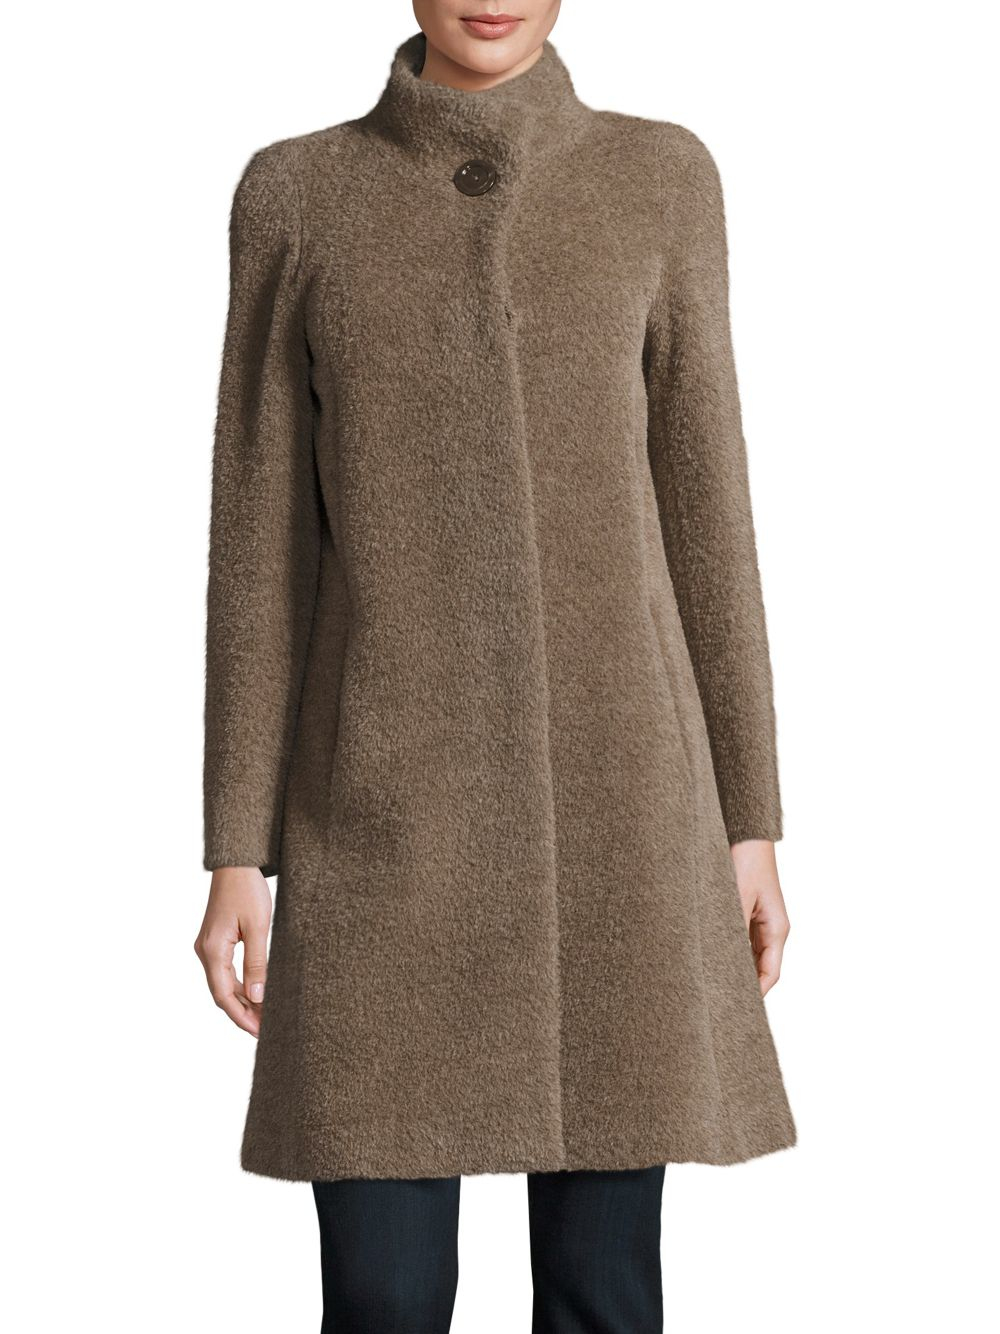 Lyst - Cinzia Rocca Suri Wool & Alpaca Coat